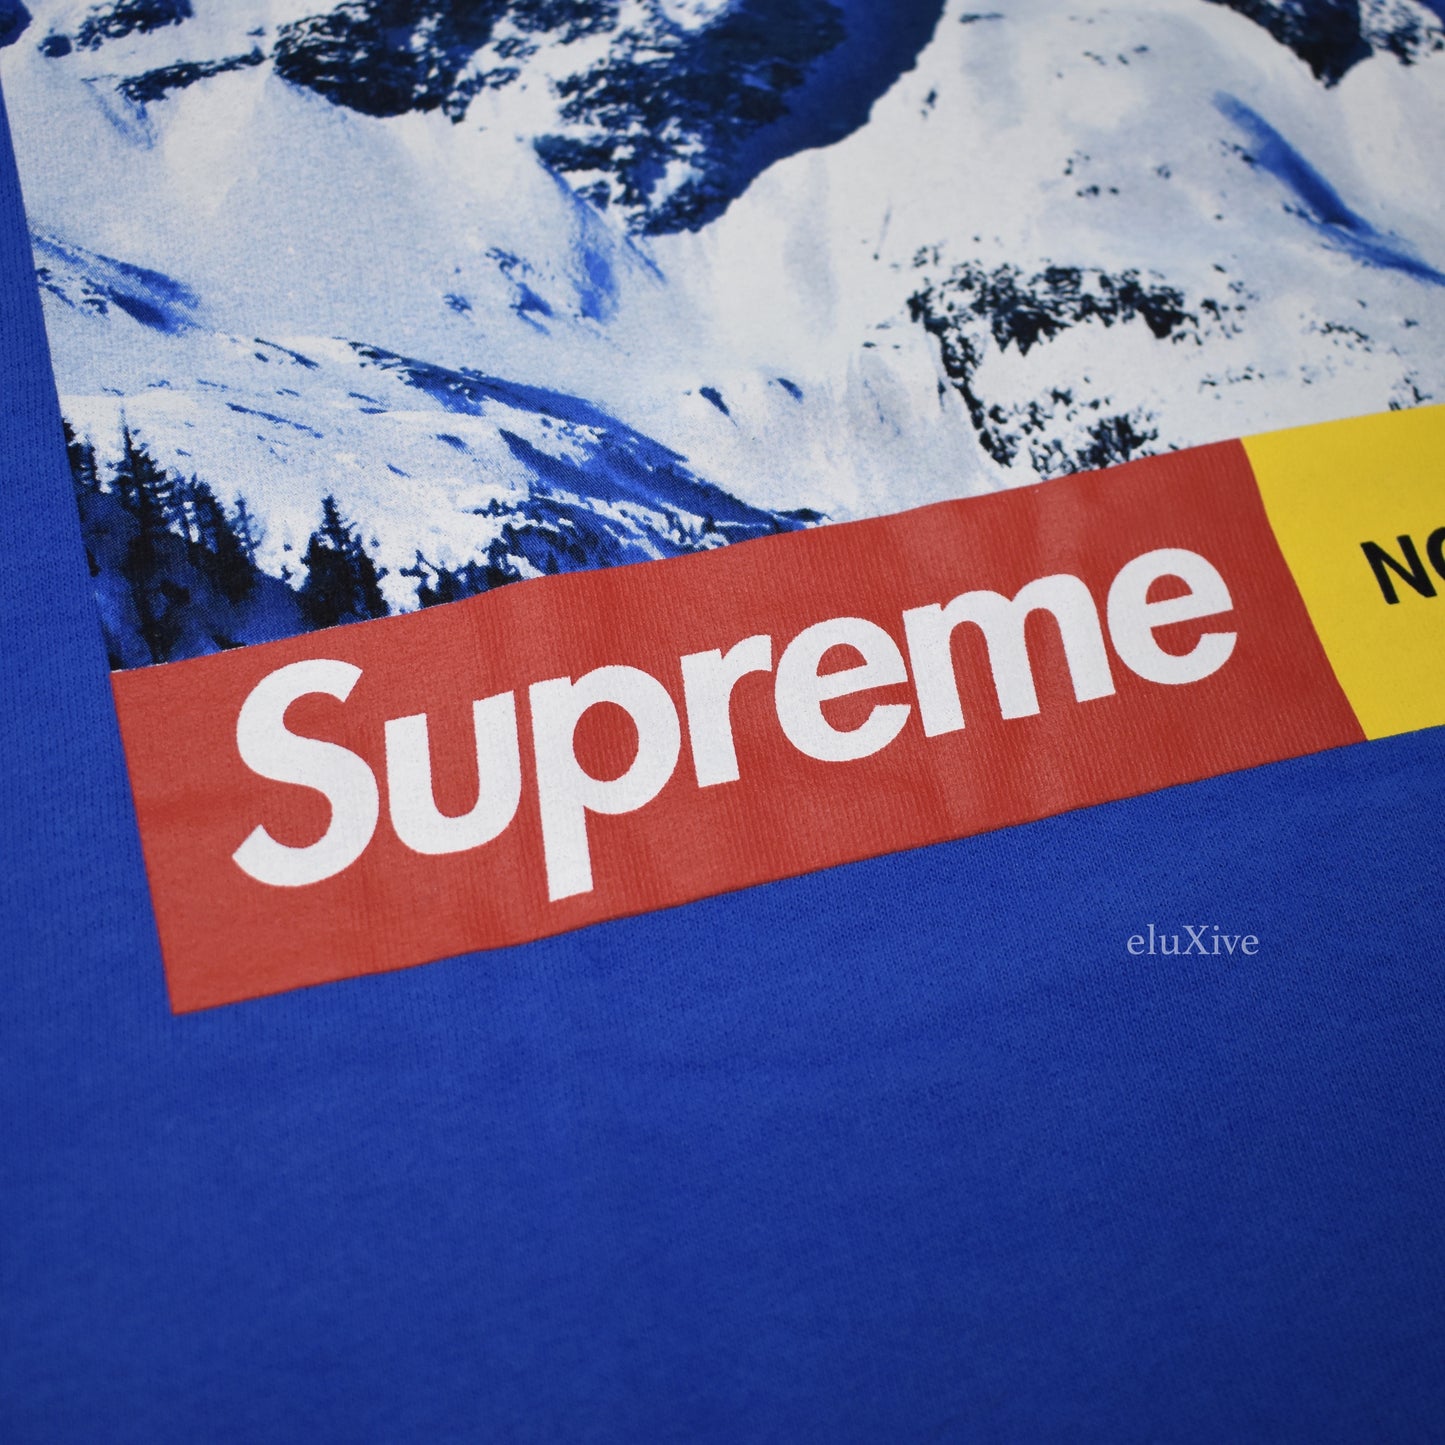 Supreme x The North Face - Blue Mountain Logo Sweatshirt